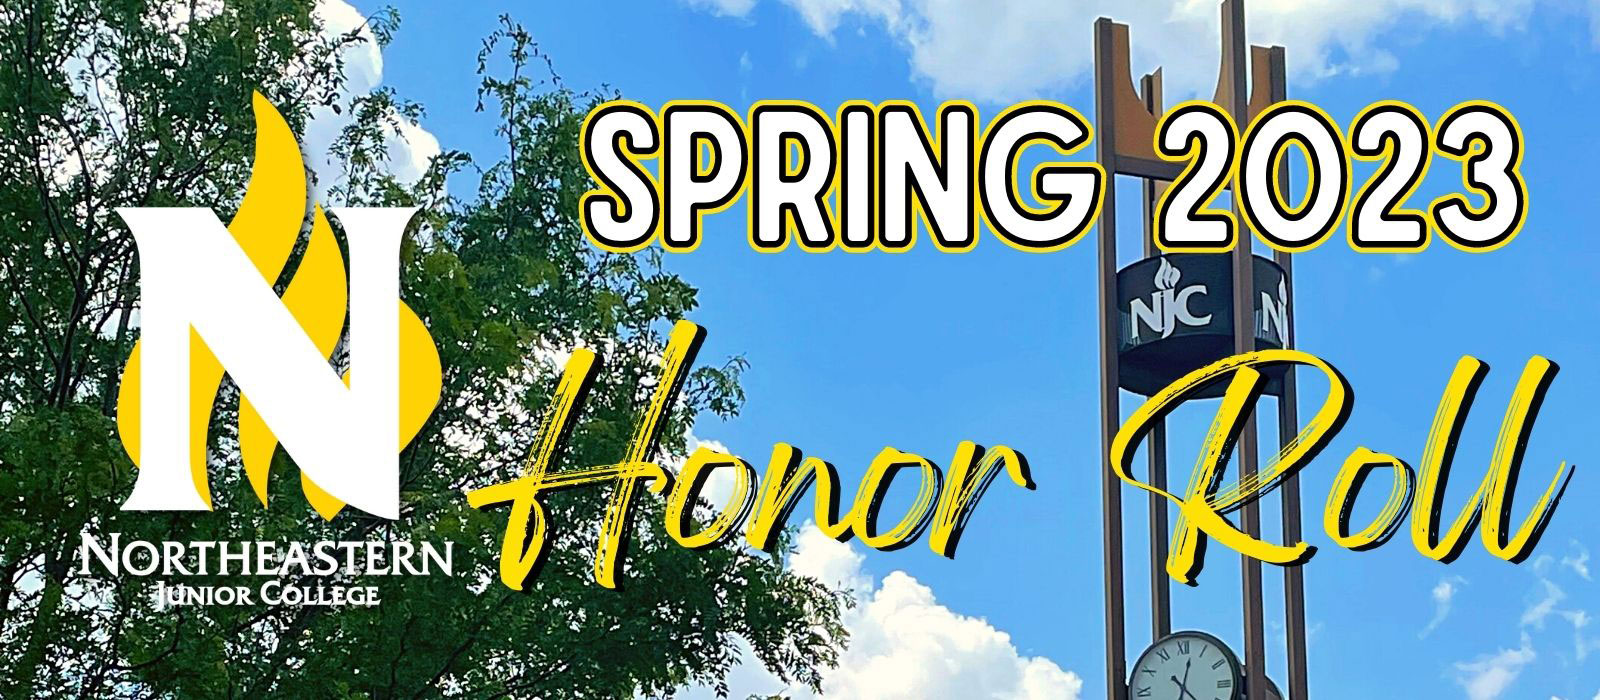 Spring 2023 Northeastern Junior College Honor Roll